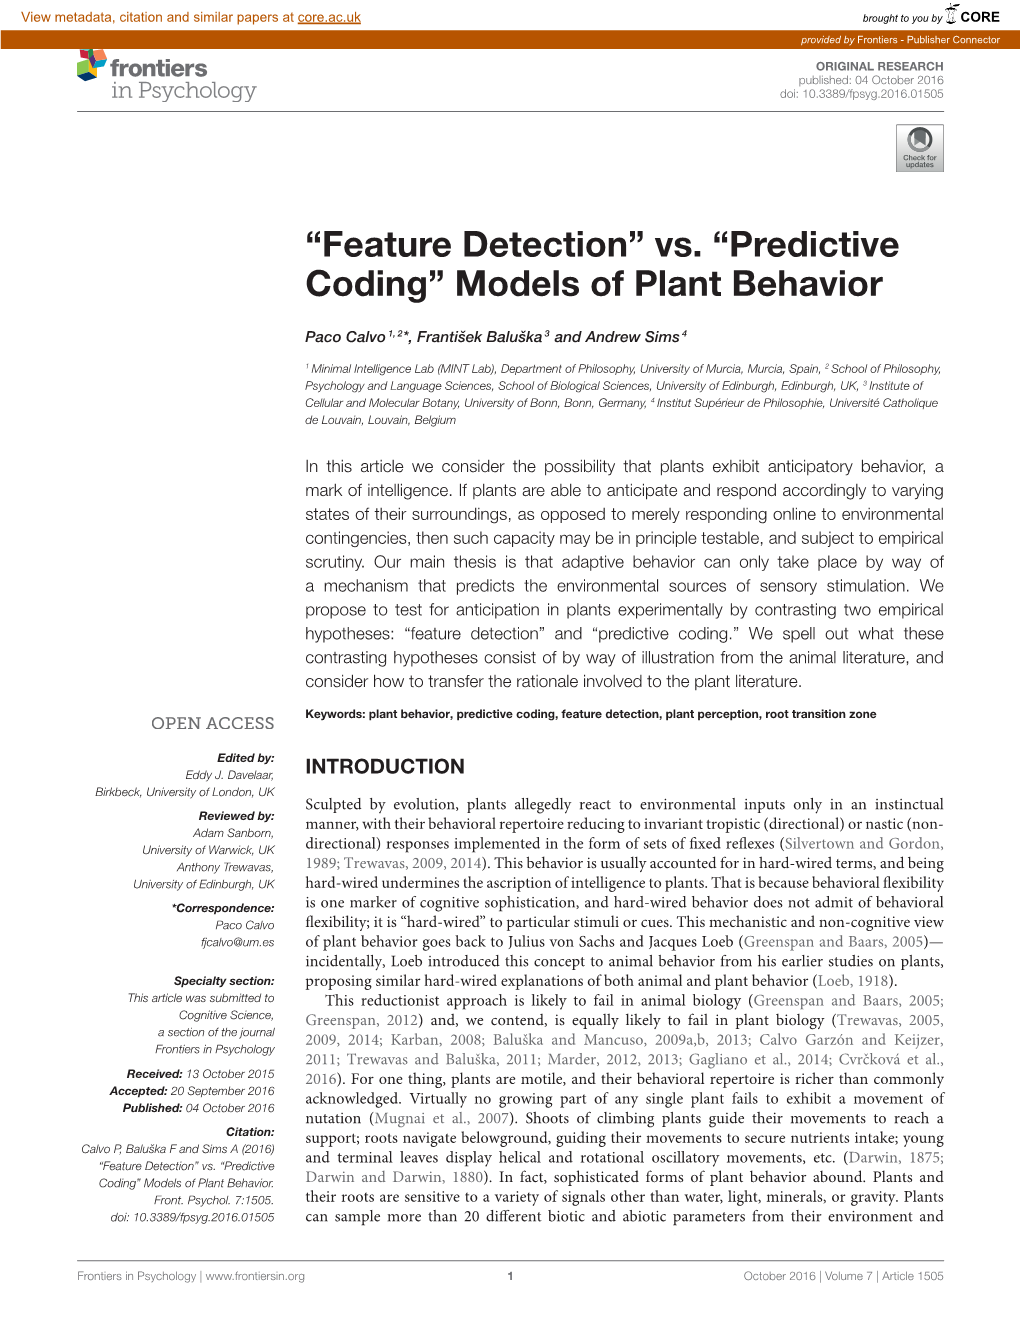 "Feature Detection'' Vs. "Predictive Coding'' Models of Plant Behavior